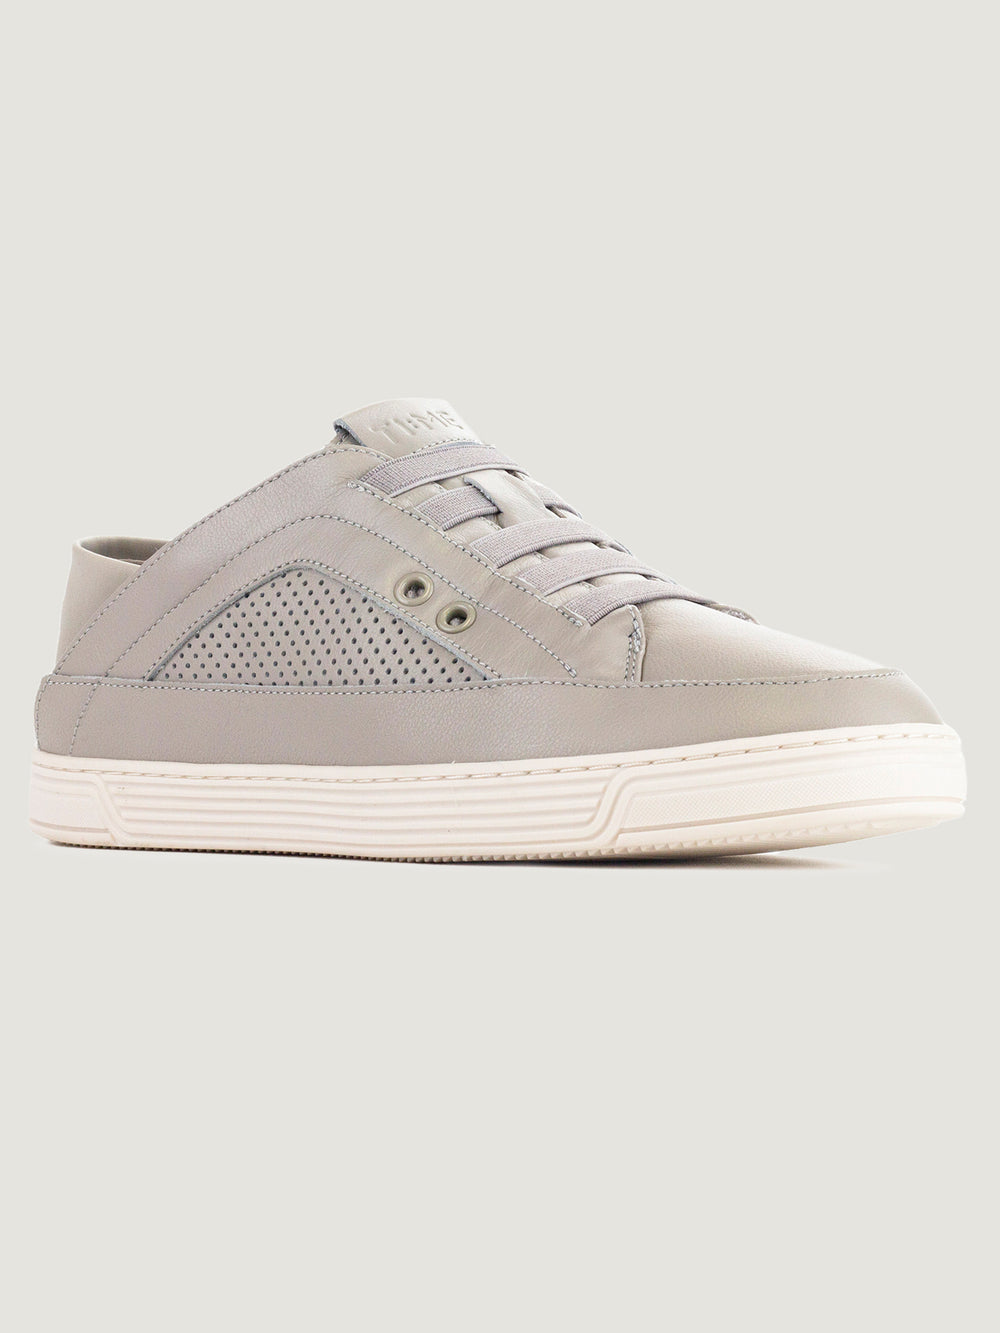 Low-Top Hybrid Slipper Sneaker - Gray